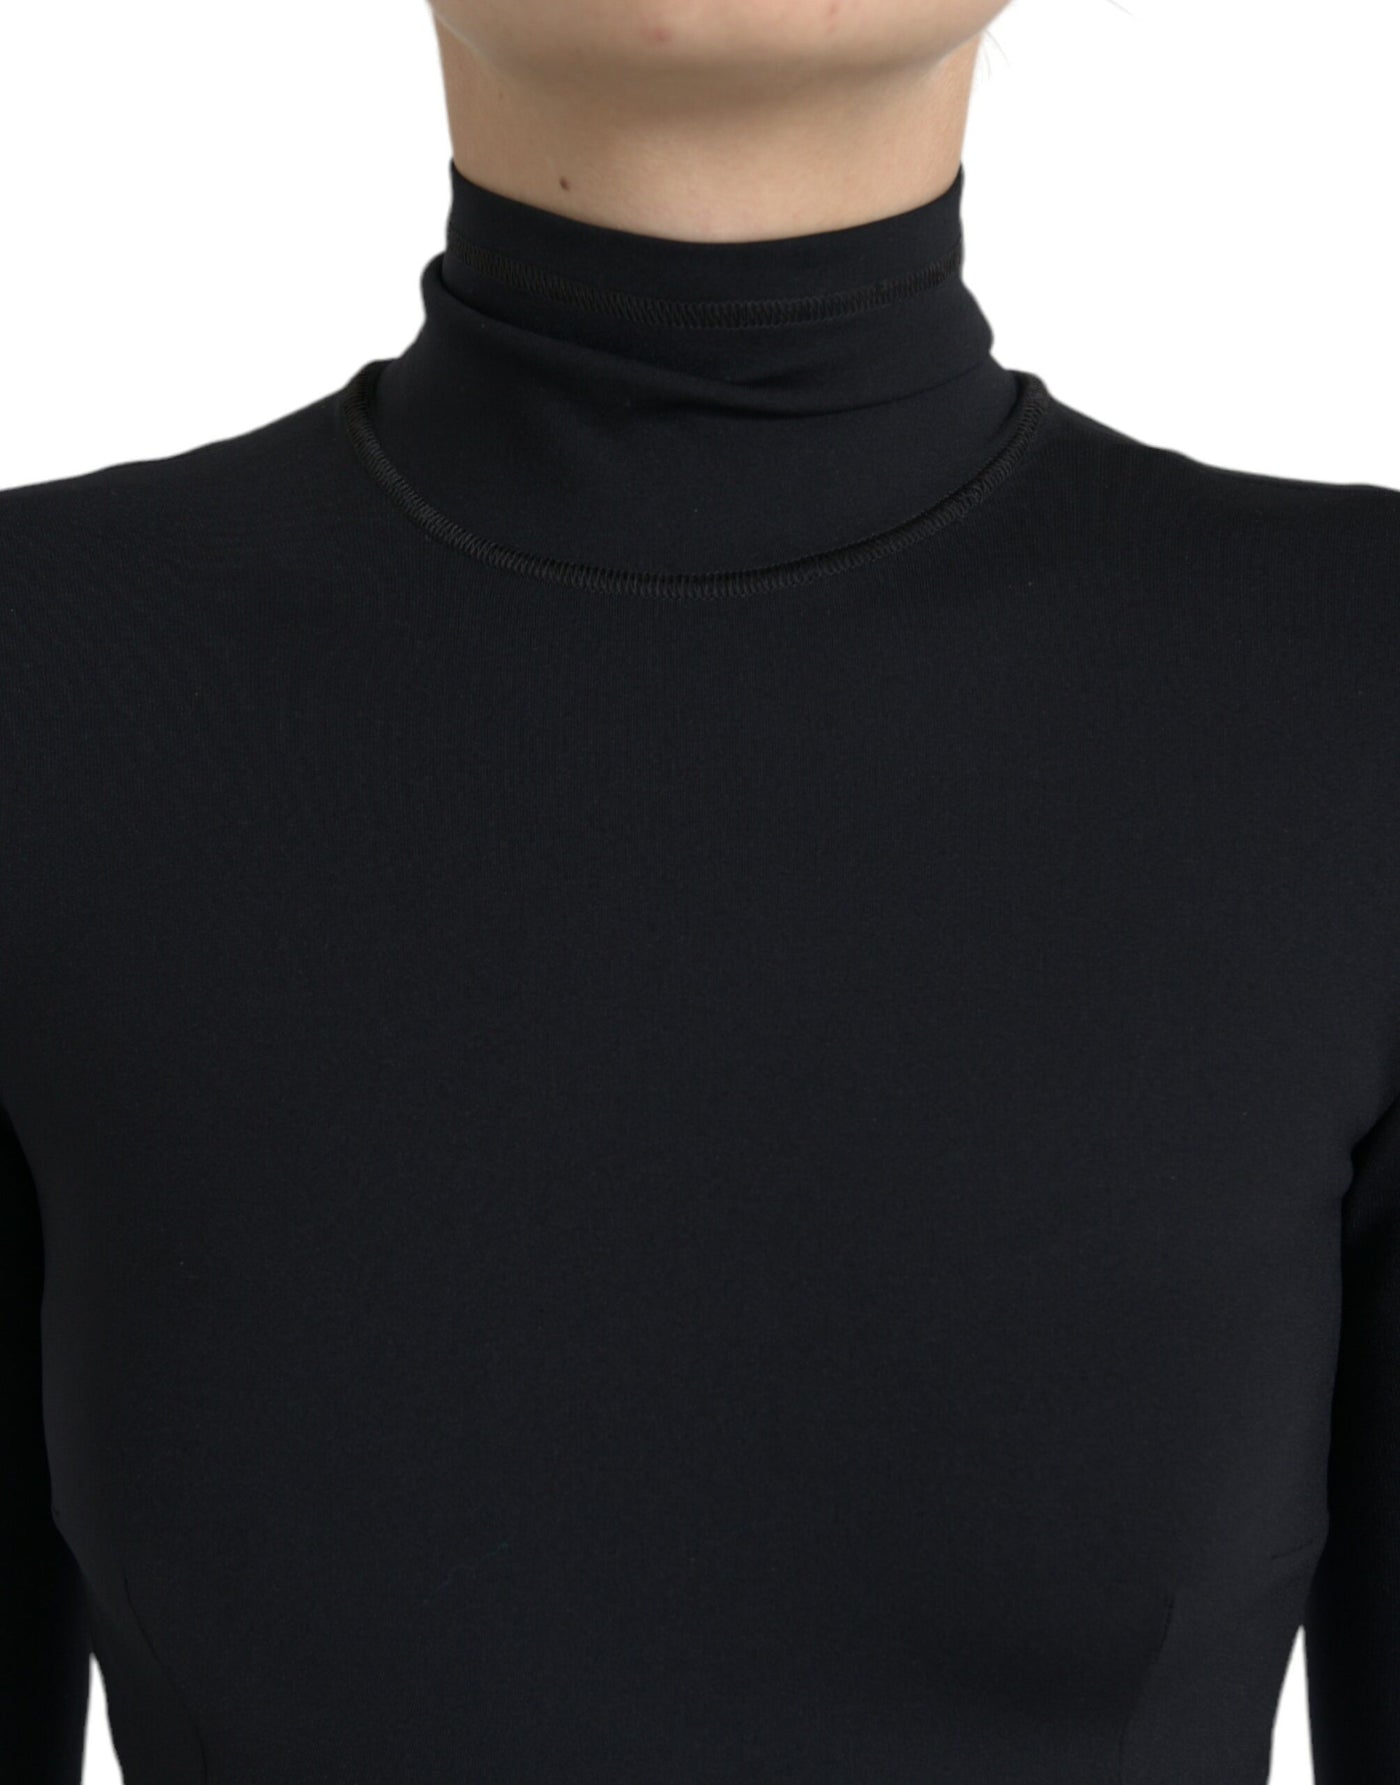 Dolce & Gabbana Black Long Sleeve Turtleneck Bodycon Dress